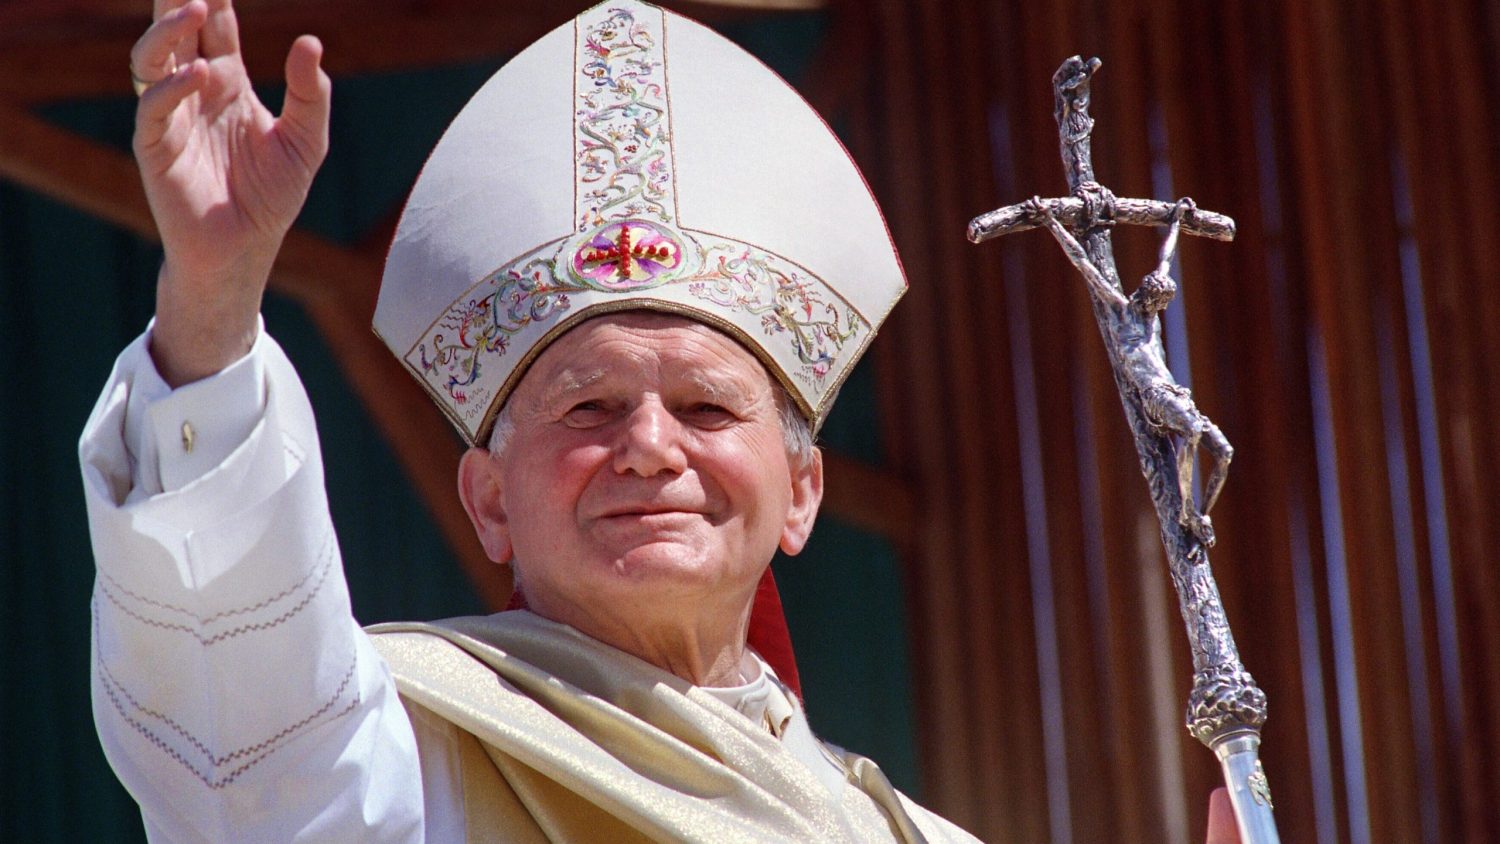 Pope John Paul II waves to the wellwisher 28 April